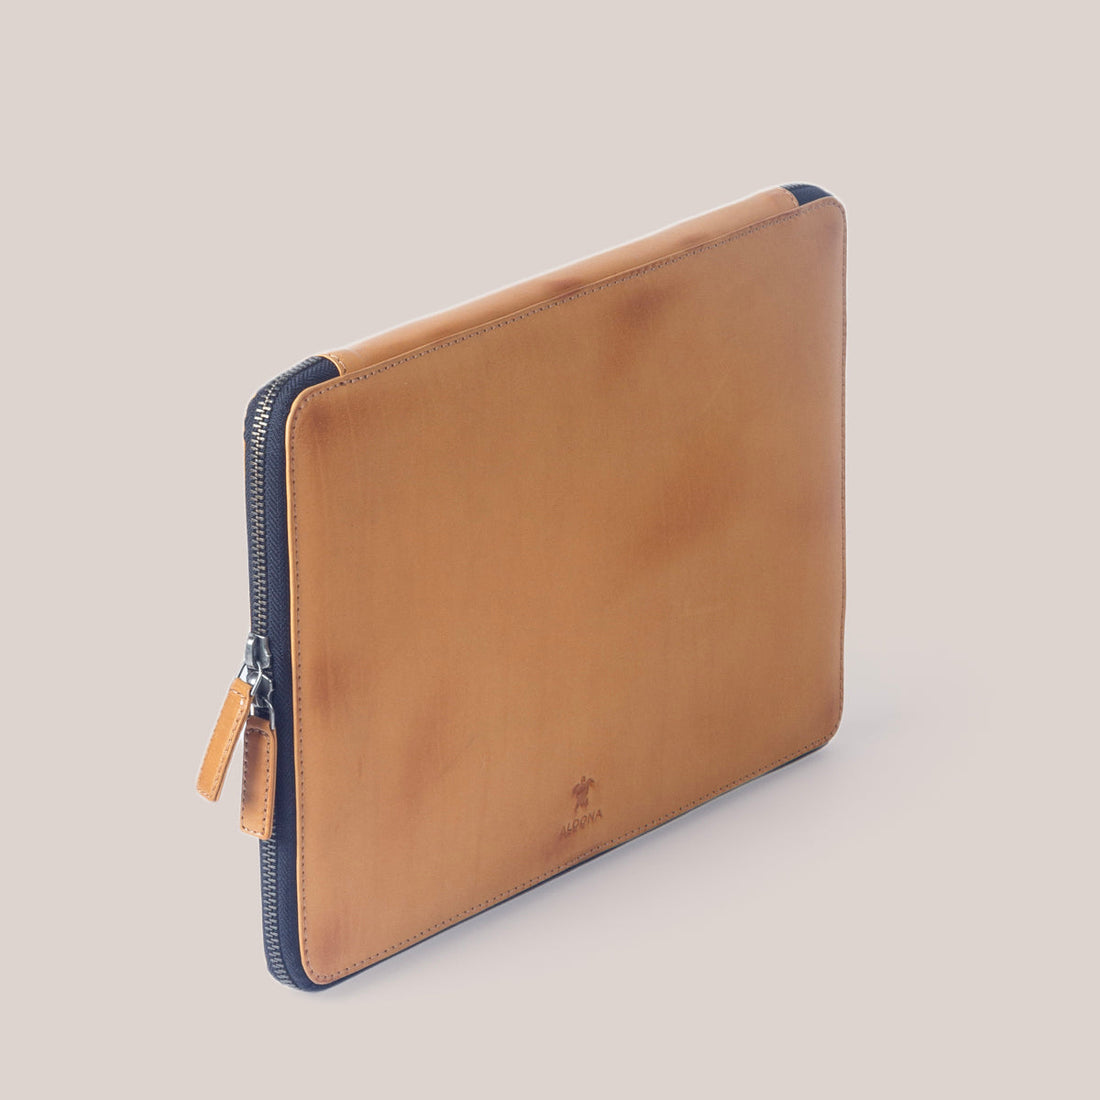 MacBook Zippered Laptop Case - Vintage Tan